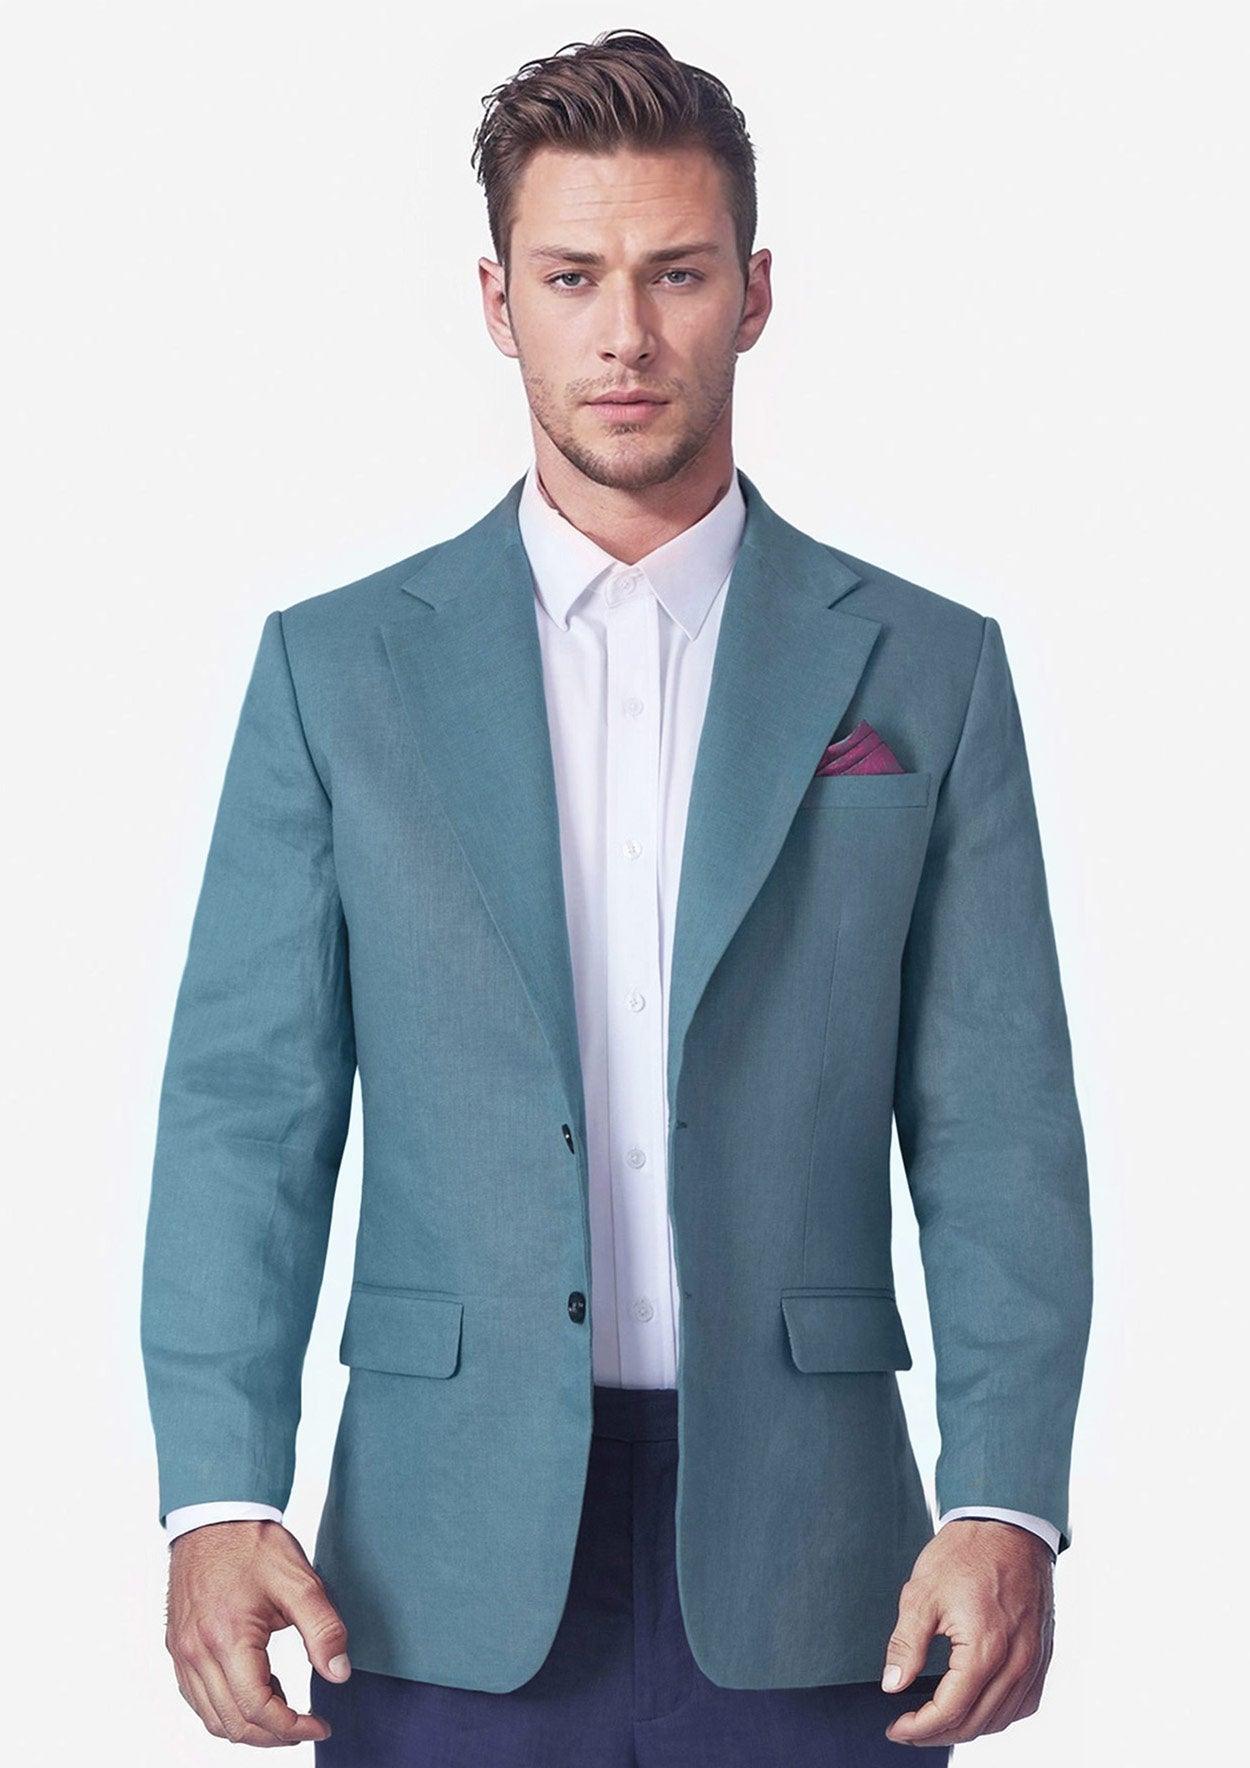 Hudson Jade Green Linen Suit